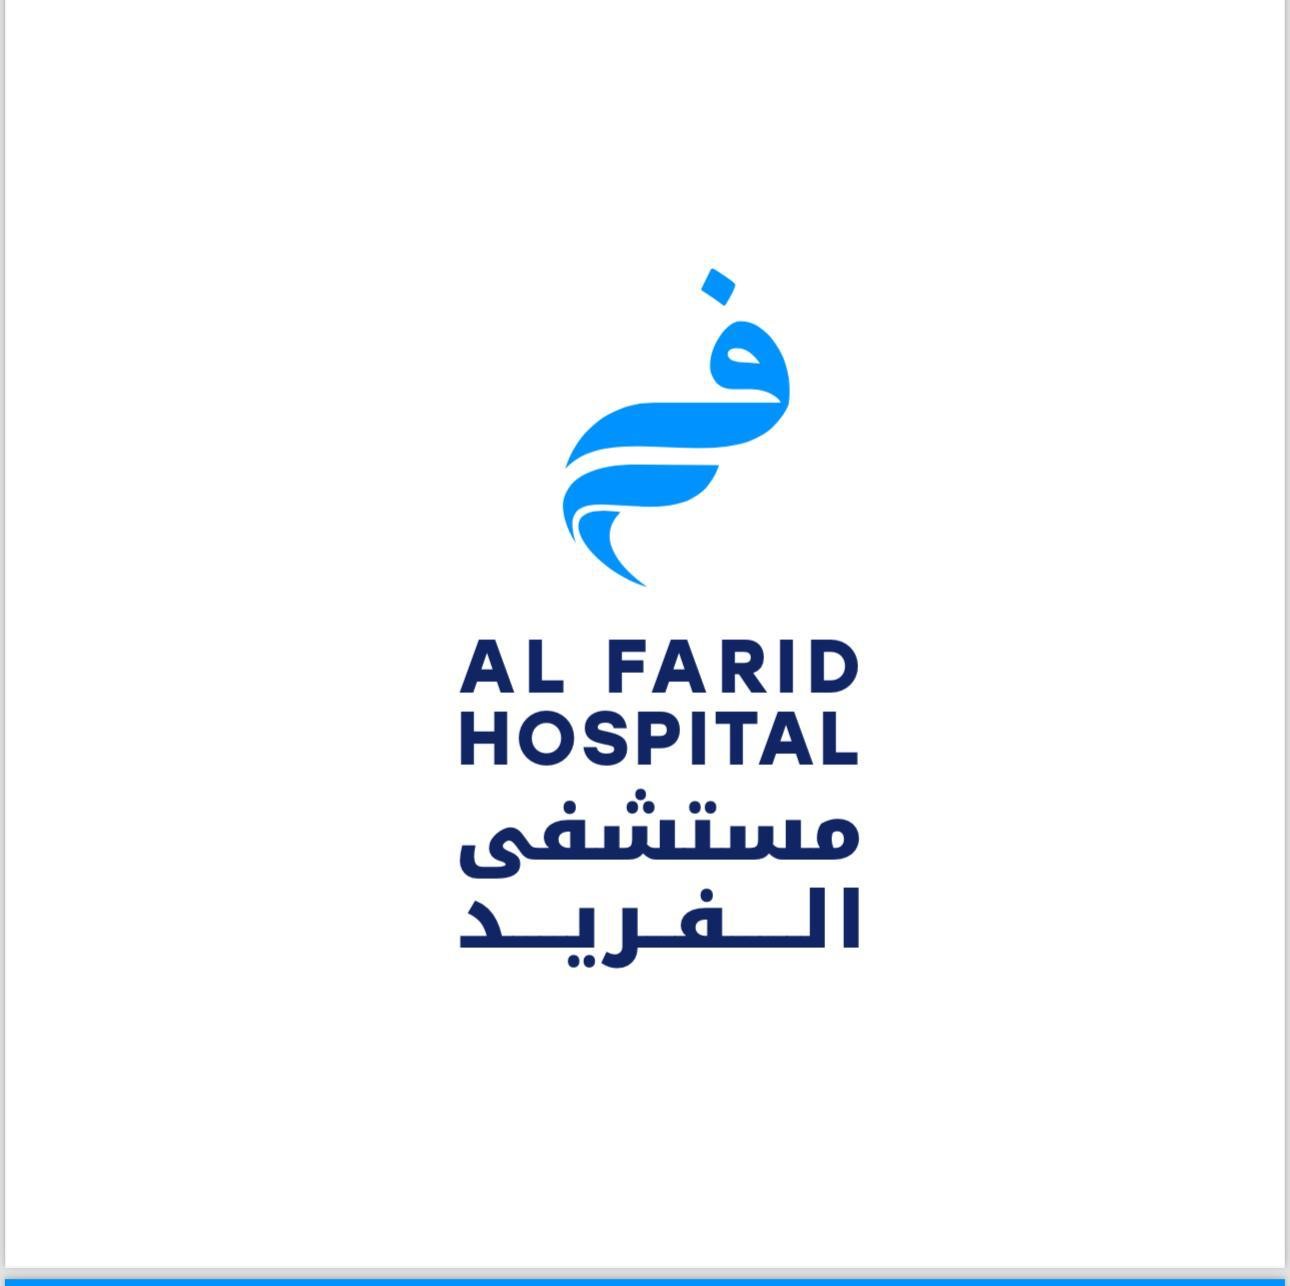 AL FARID HOSPITAL logo